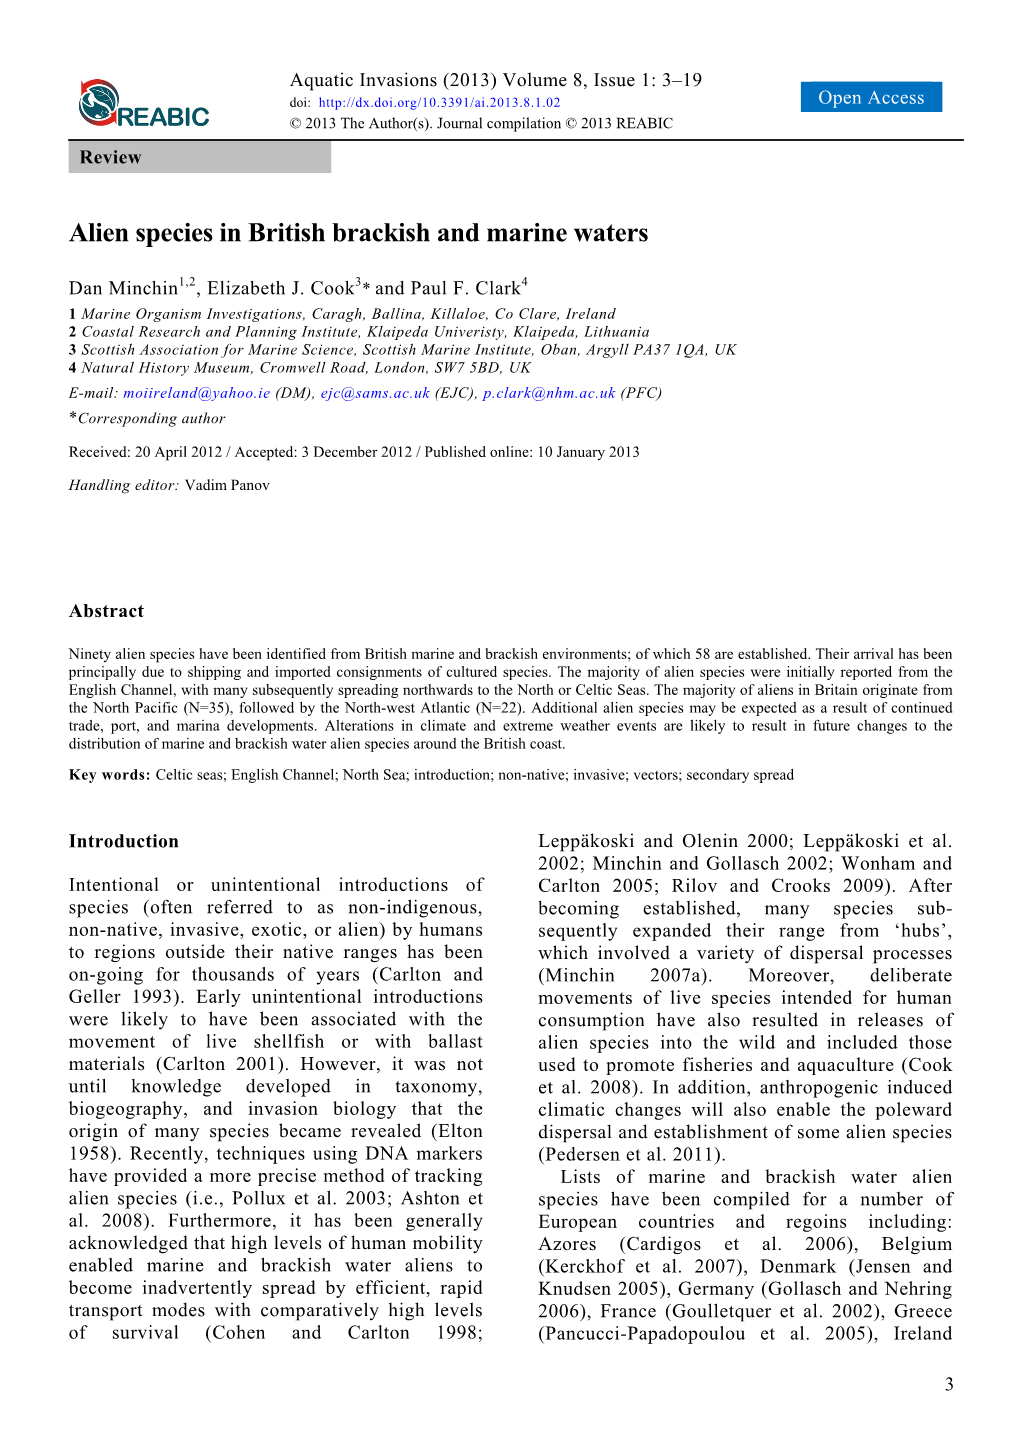 Alien Species in British Brackish and Marine Waters